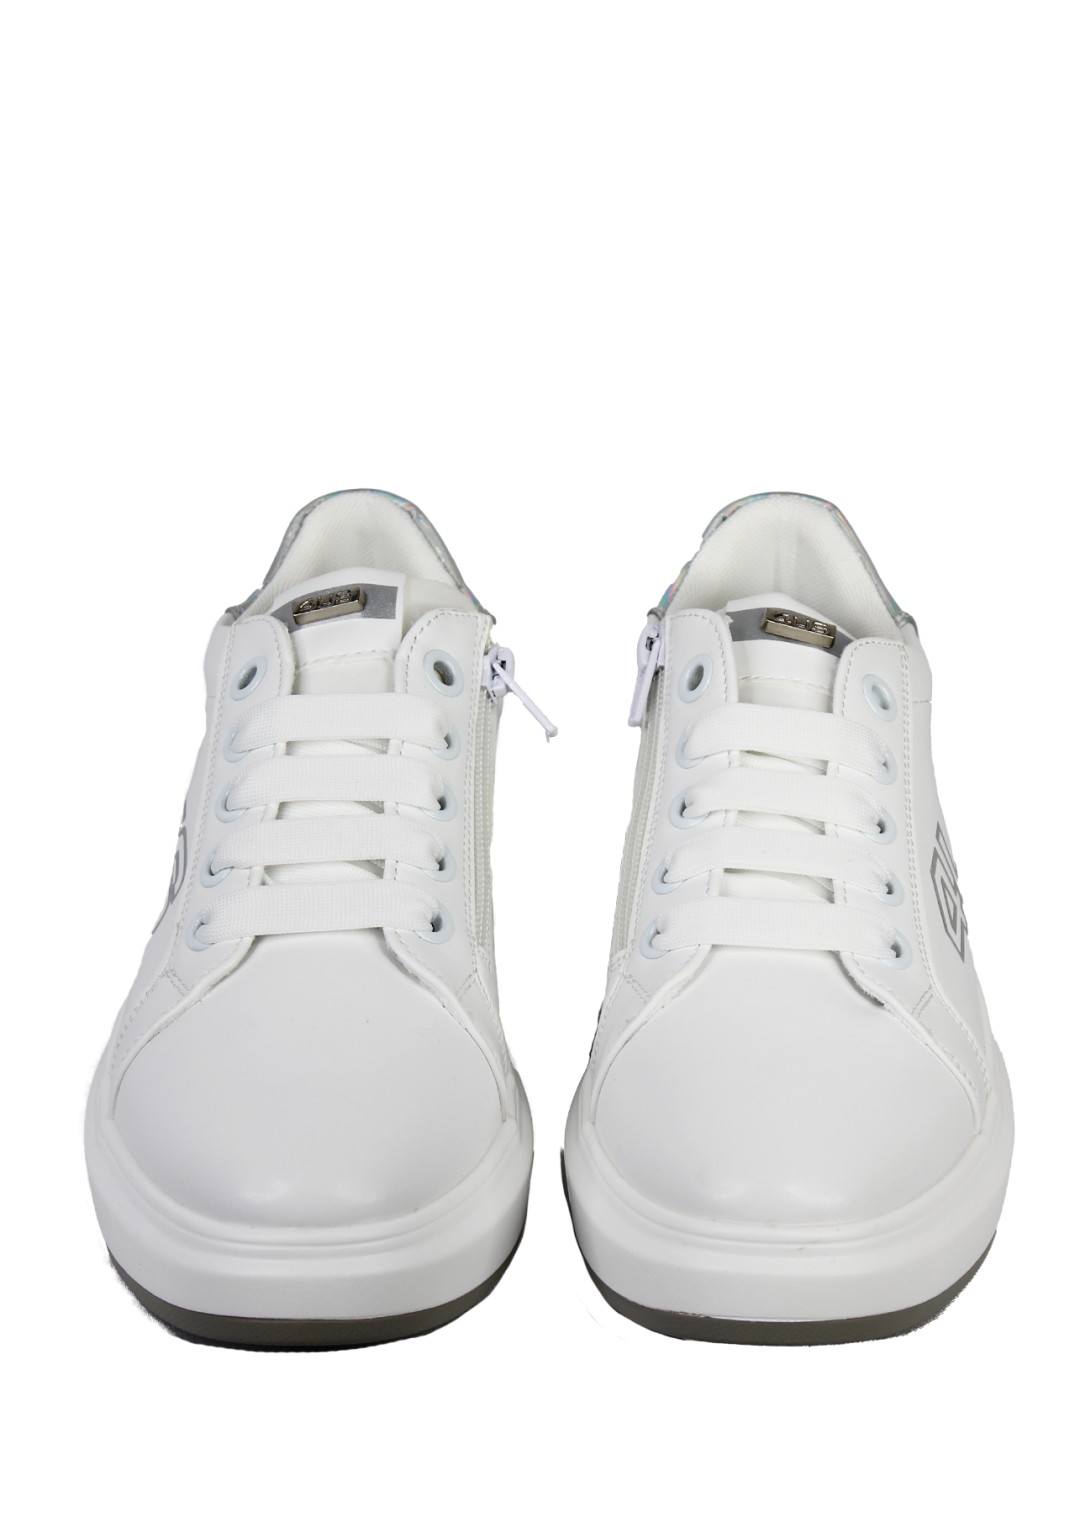 4US - Sneaker - Donna - 42706B D